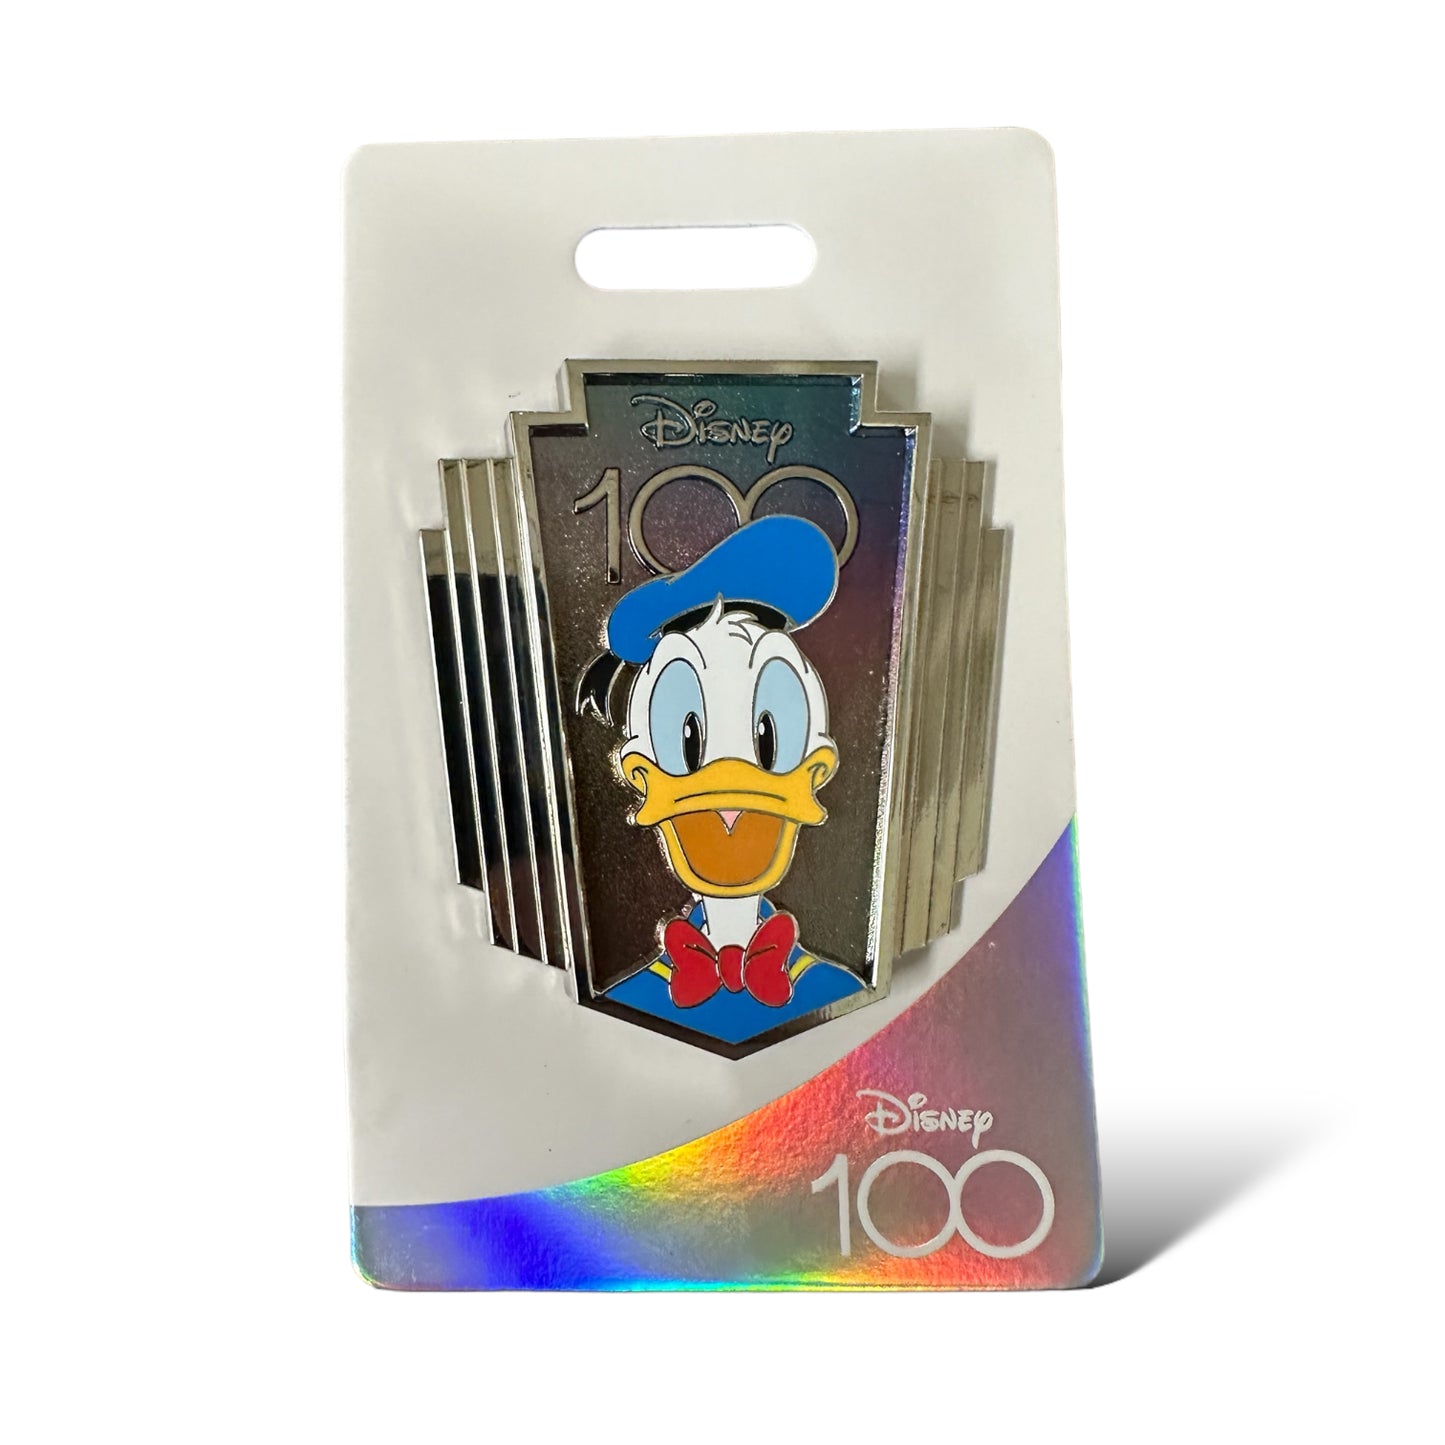 WDI Disney 100 Donald Duck Pin